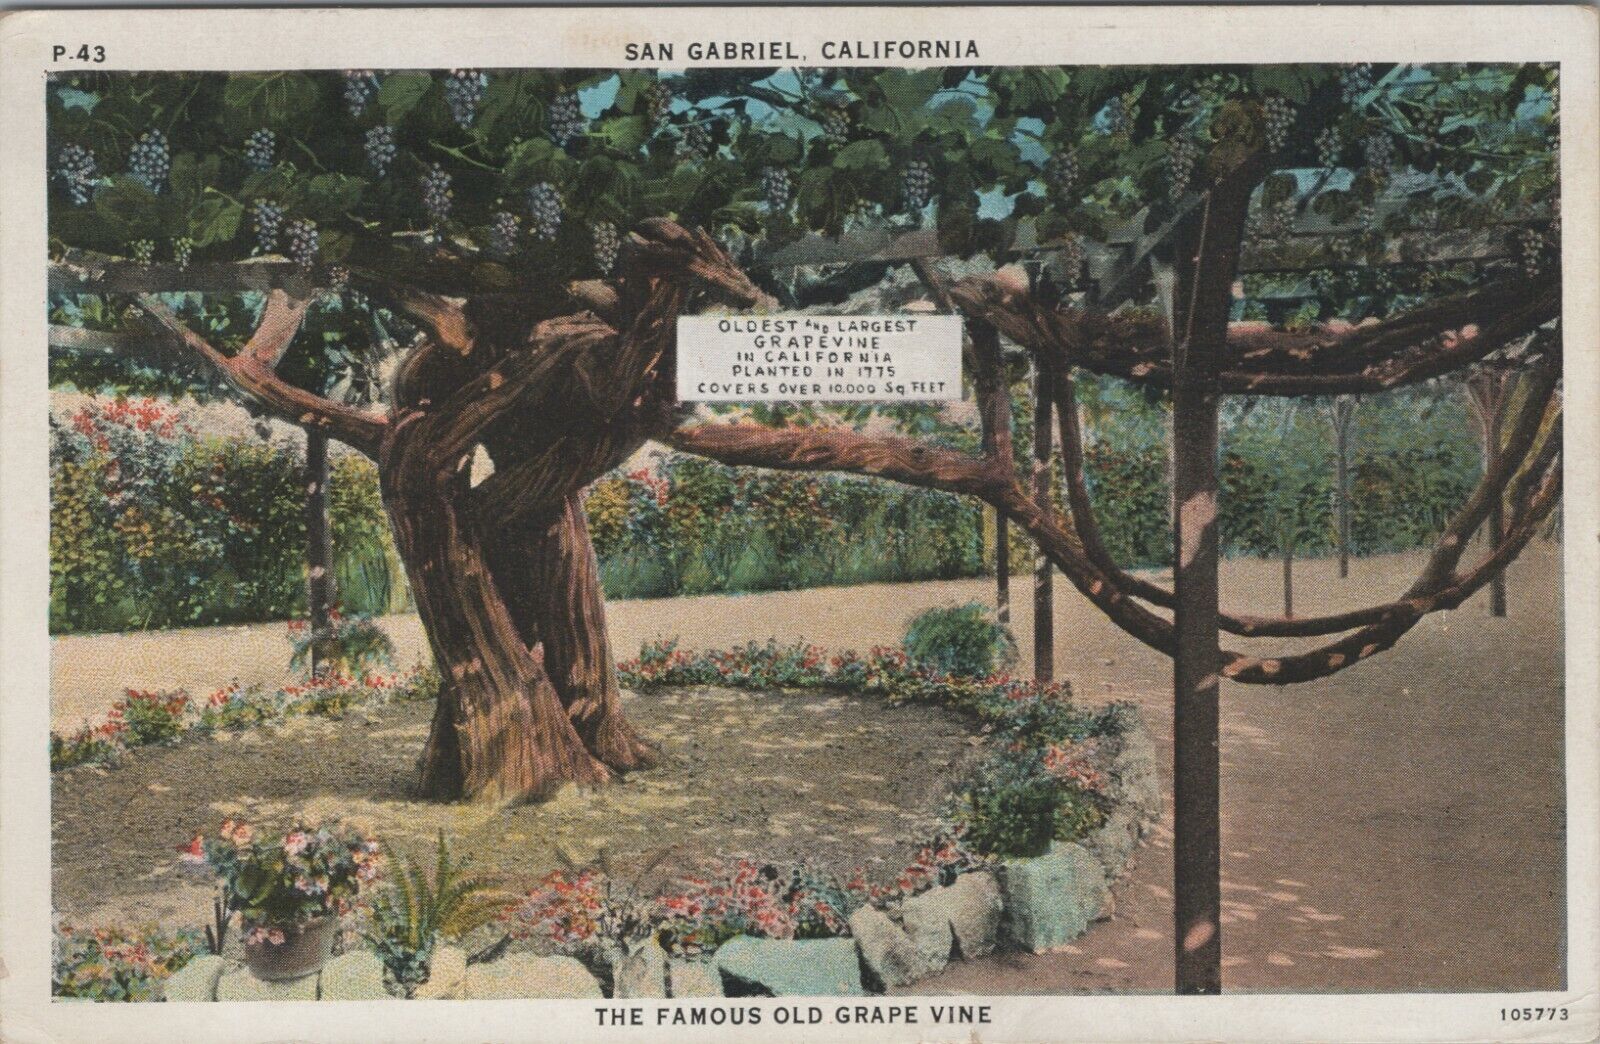 San Gabriel California 100+ year old grape vine planted 1775 c1930 postcard A376